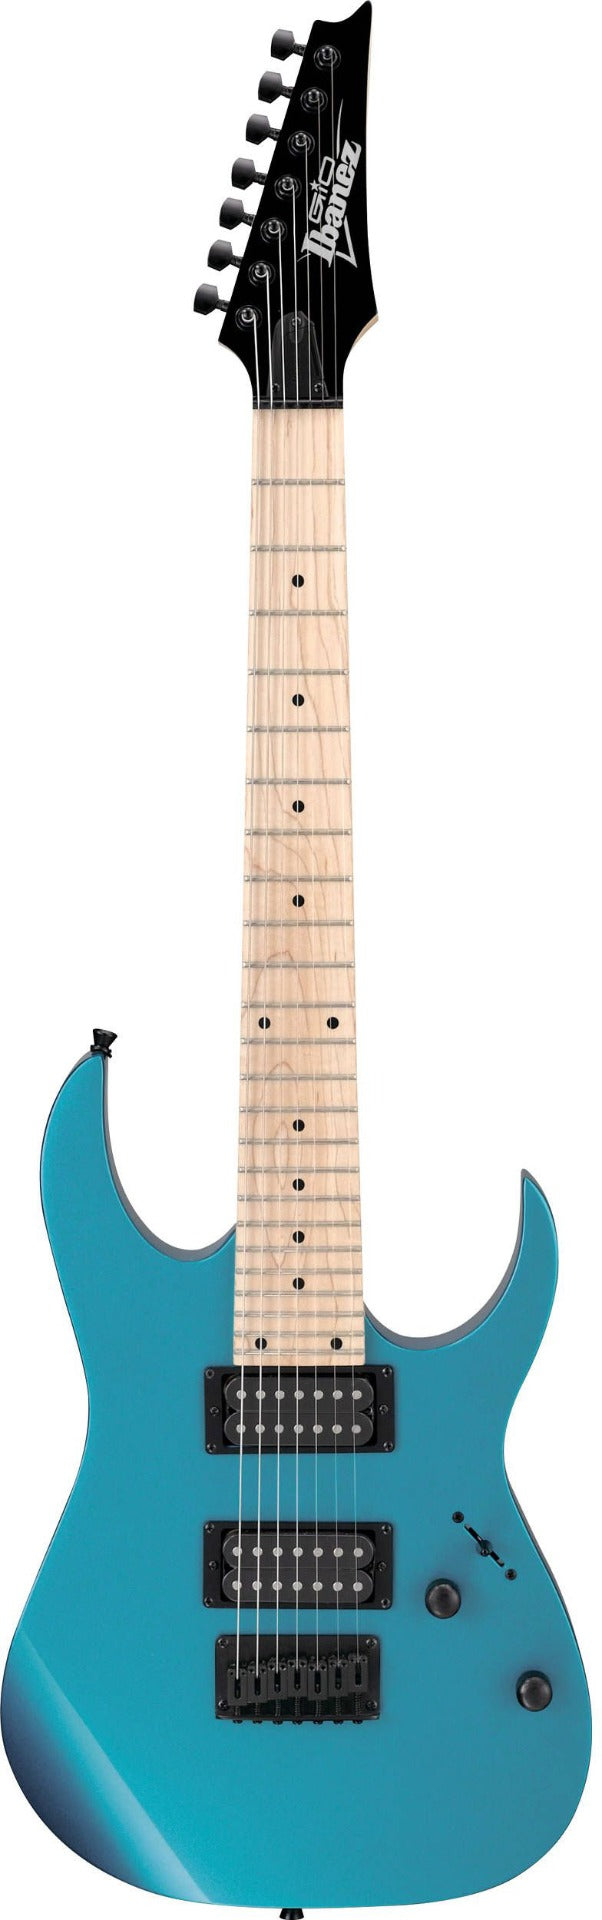 Ibanez GRG7221M MLB 7-String Electric Guitar Metallic Light Blue